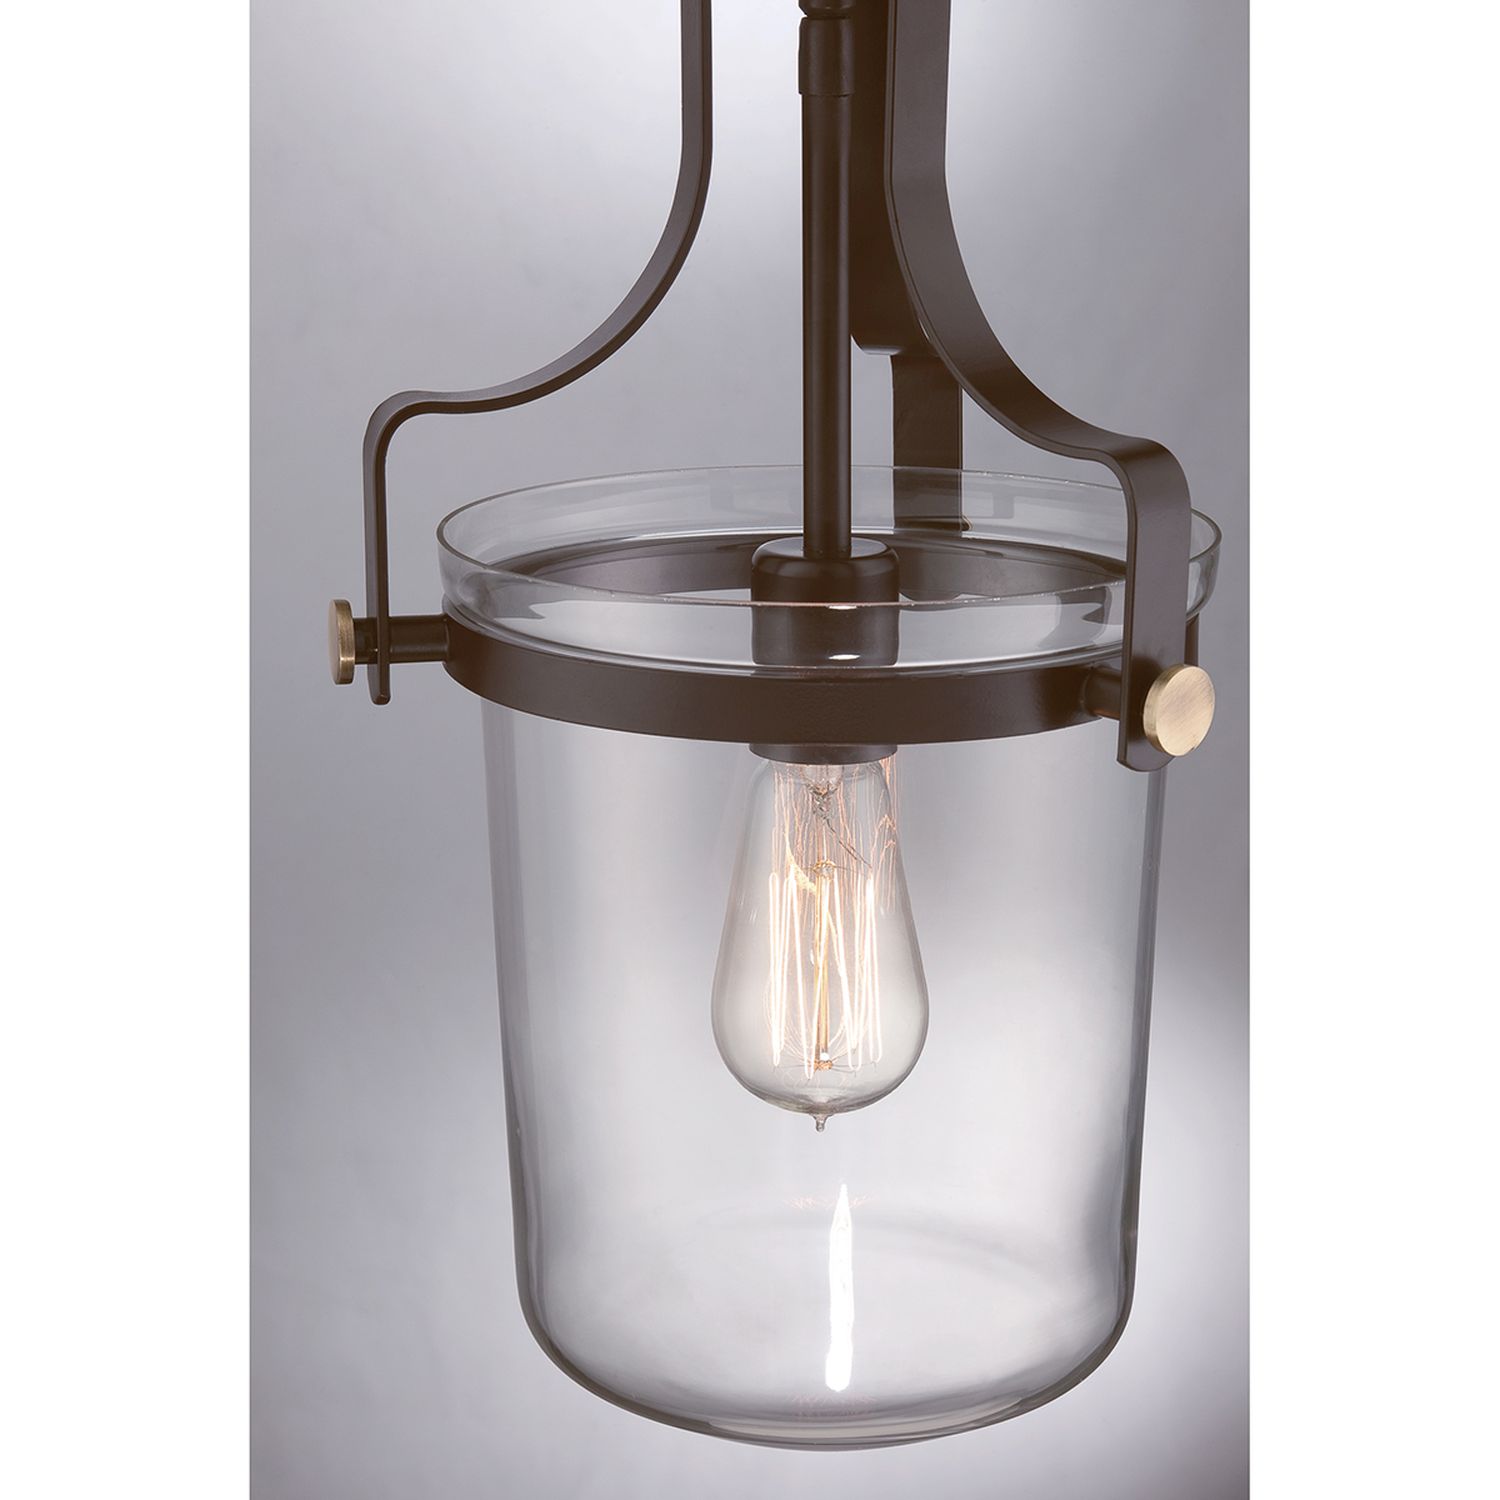 Deckenlampe Glas Metall in Klar Bronze E27 Industrial